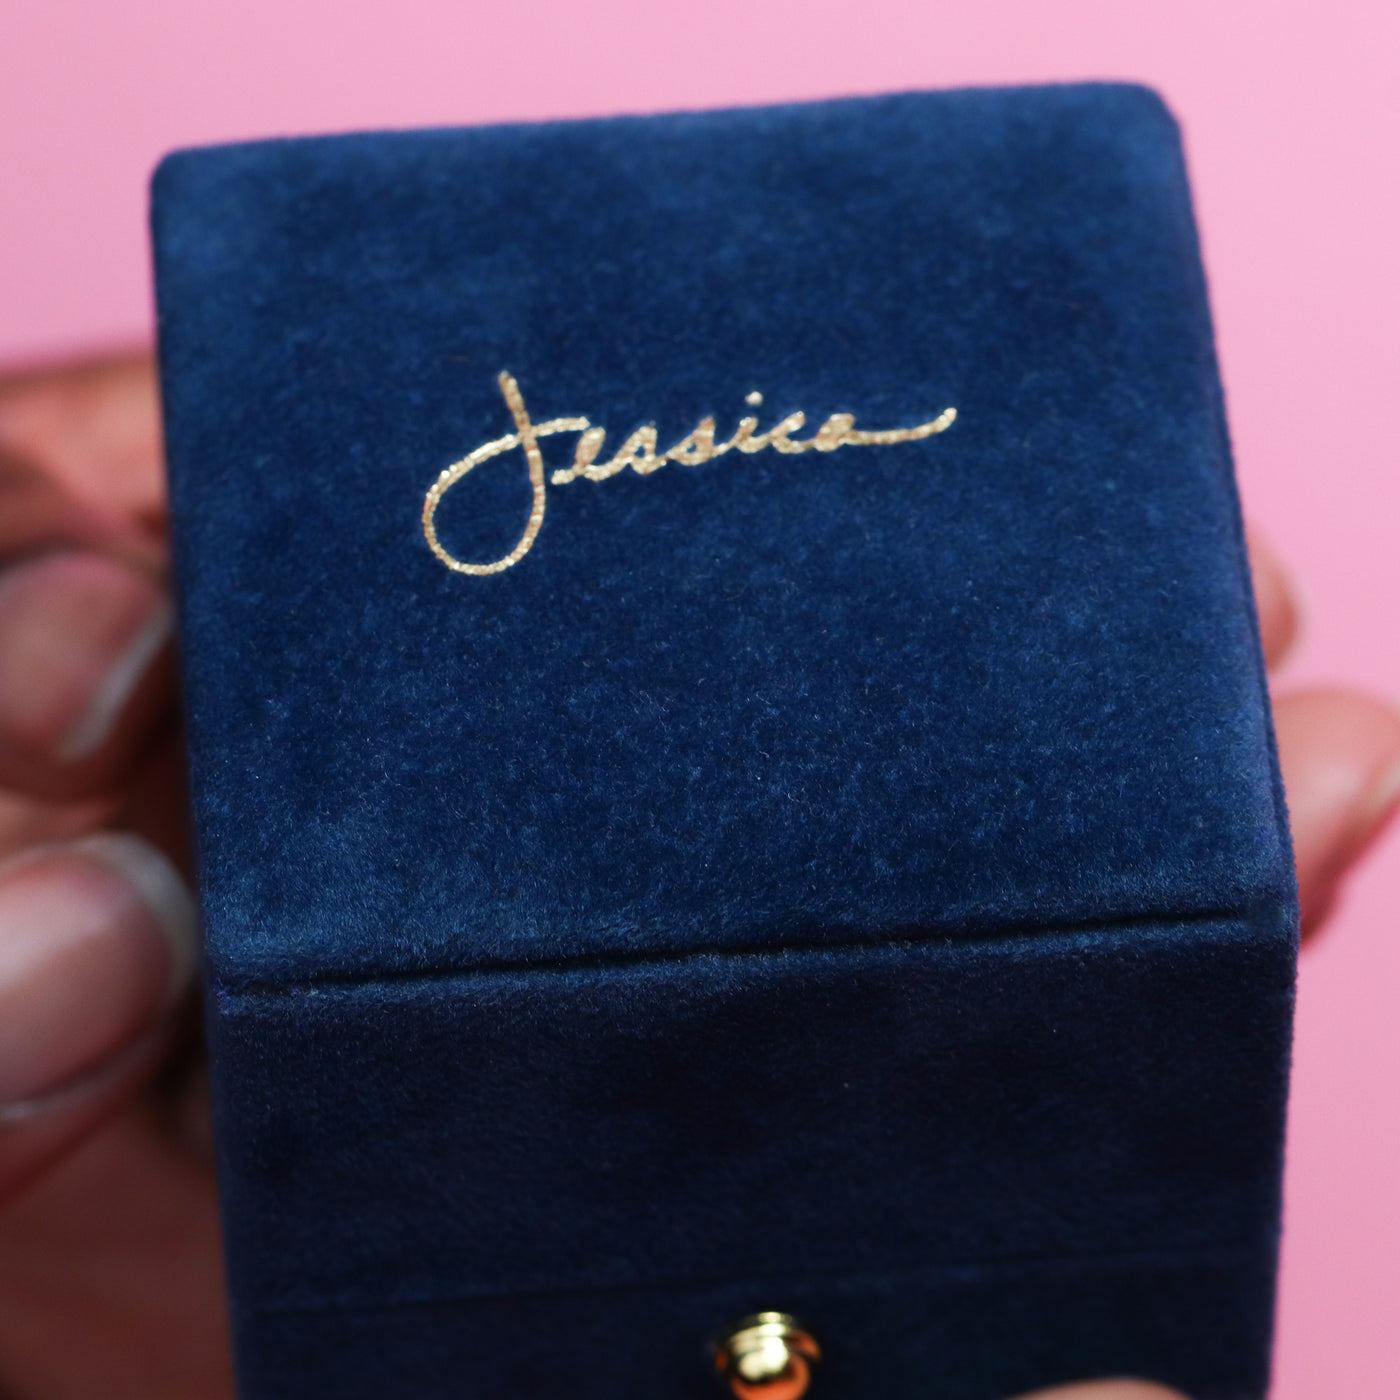 Aster - Mid Lab Grown Diamond Set Huggie Earrings in 9ct Rose Gold - Ready-to-Wear